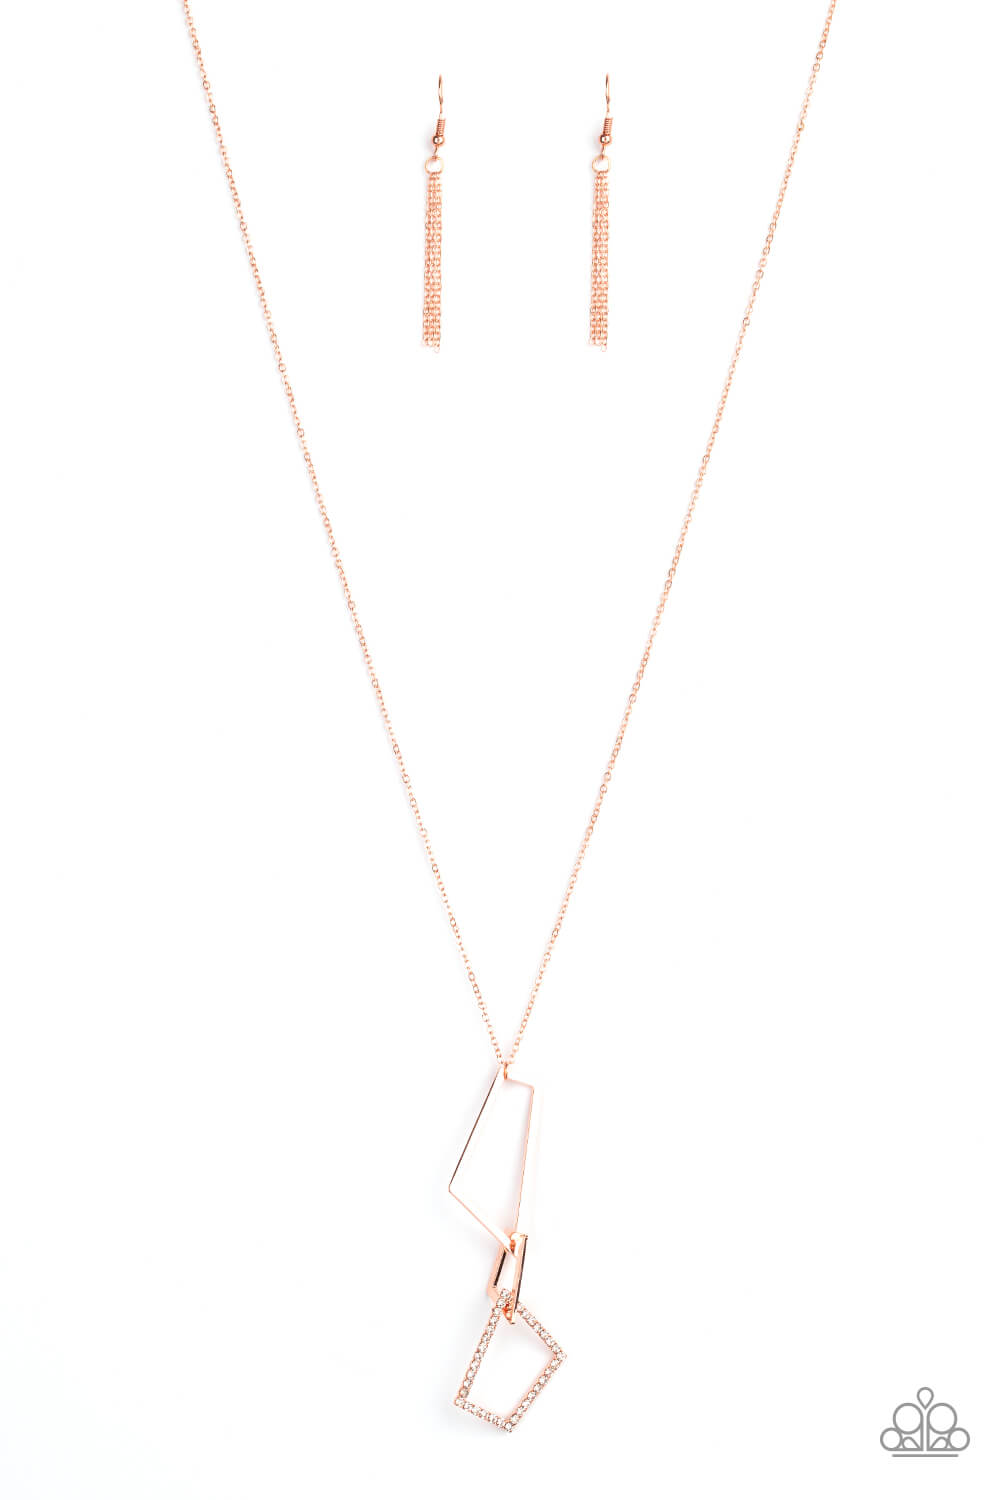 Shapely Silhouettes - Copper Necklace Set - Princess Glam Shop